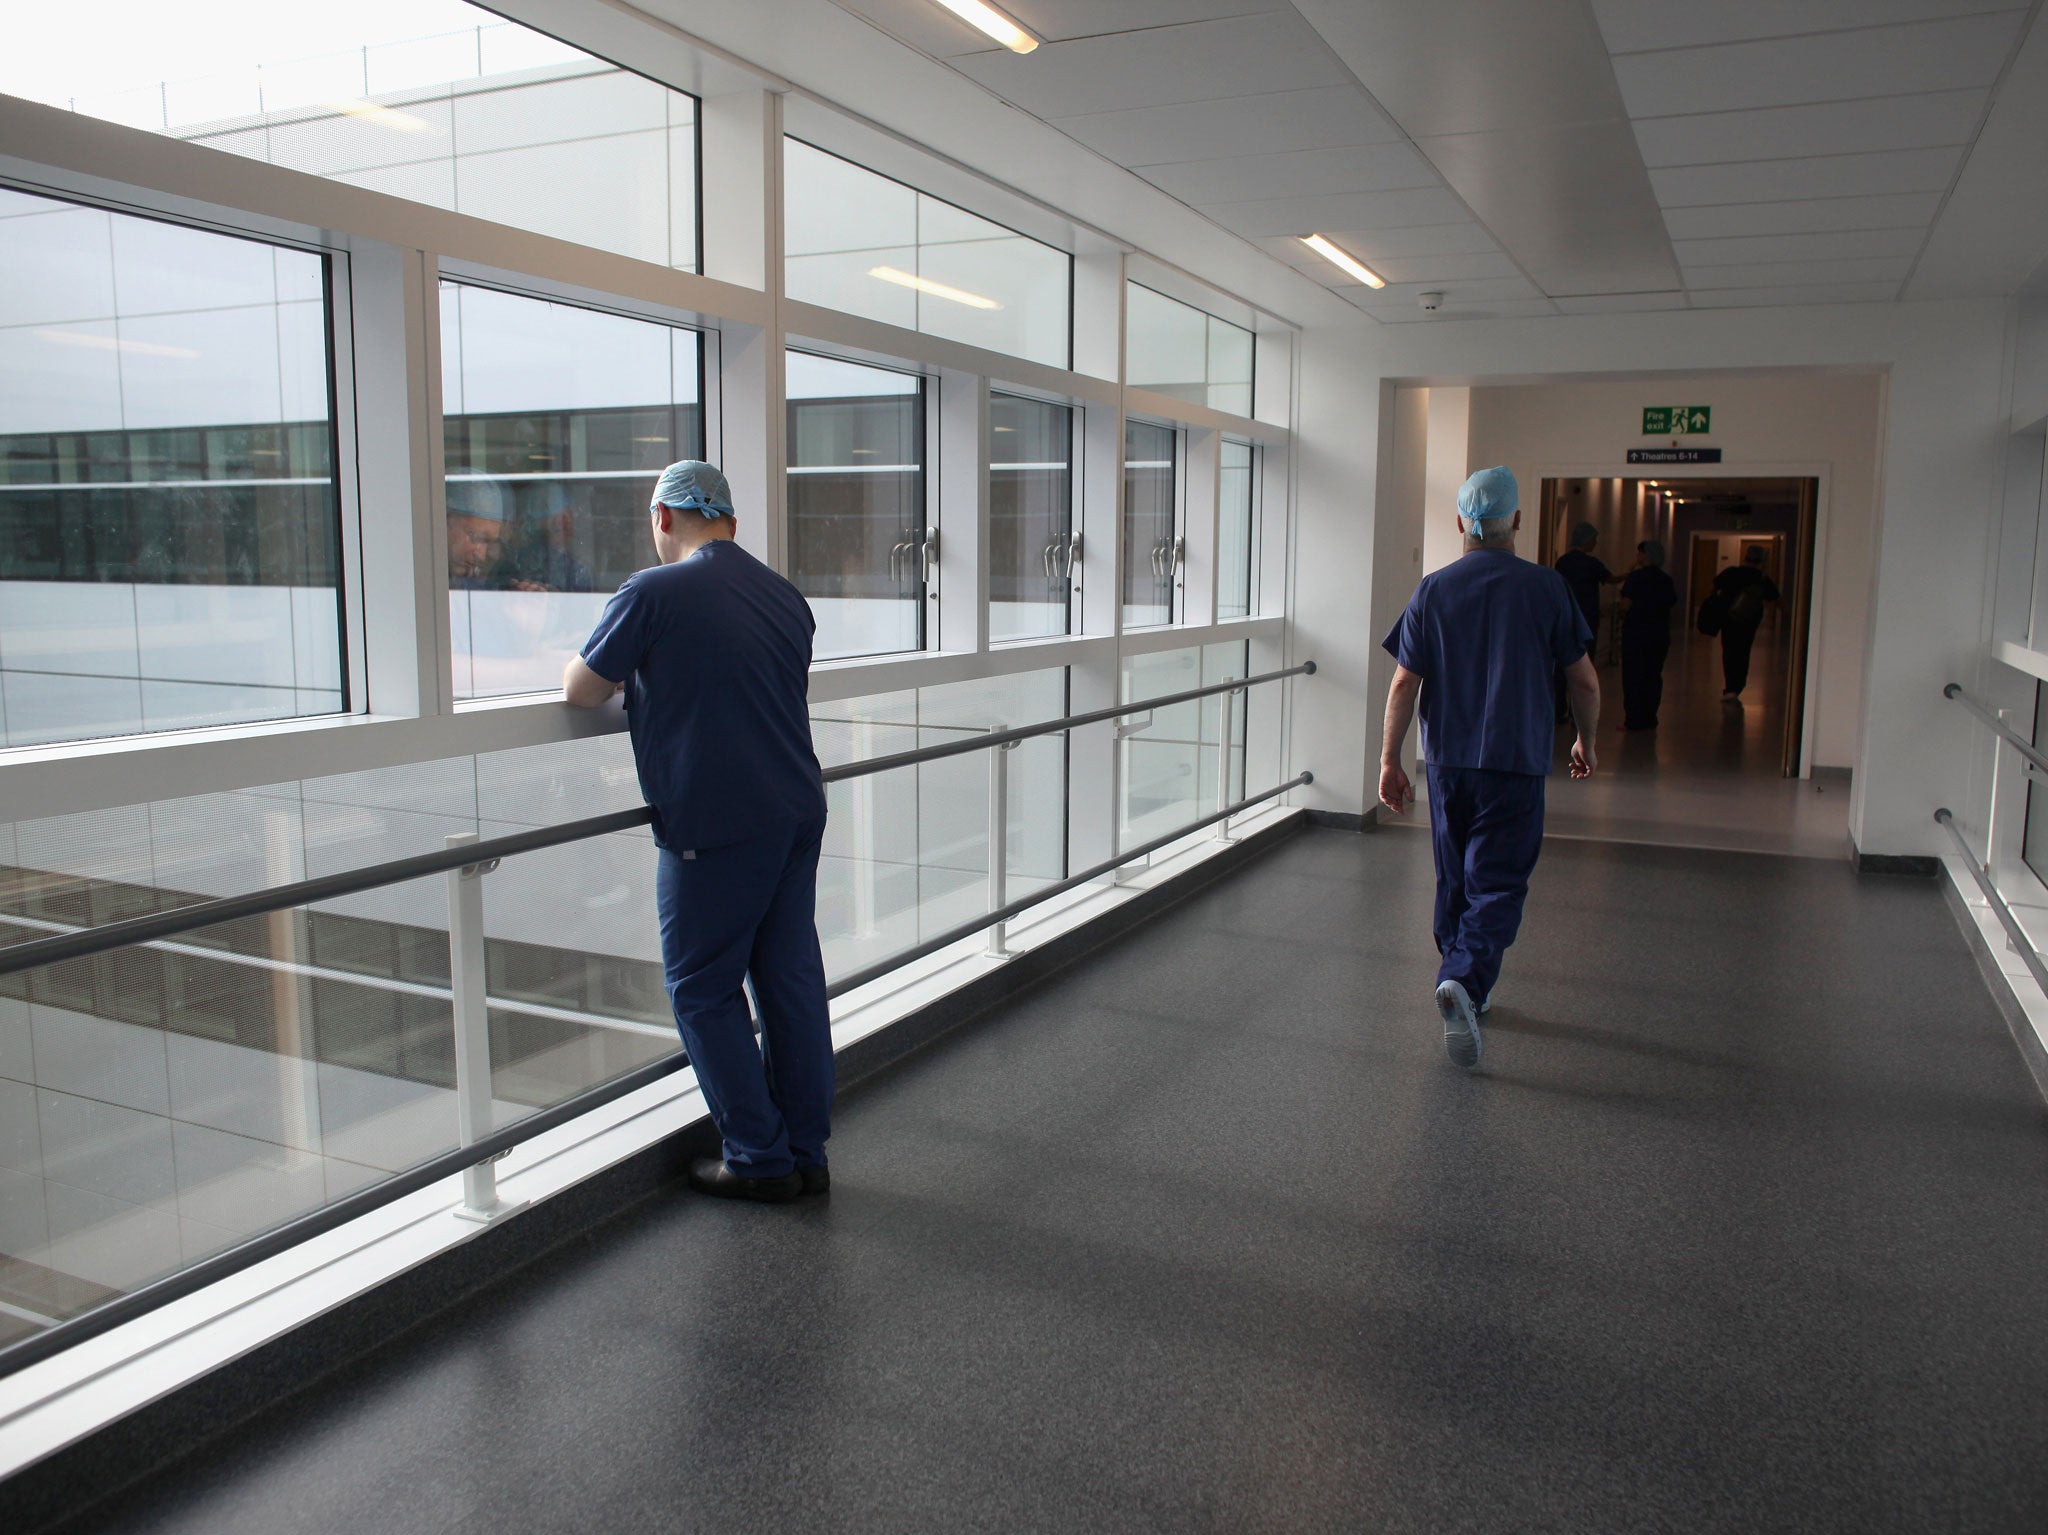 Operating theatre staff walk along a corridor in the recently opened Birmingham Queen Elizabeth Hospital on February 7, 2011 in Birmingham, England.